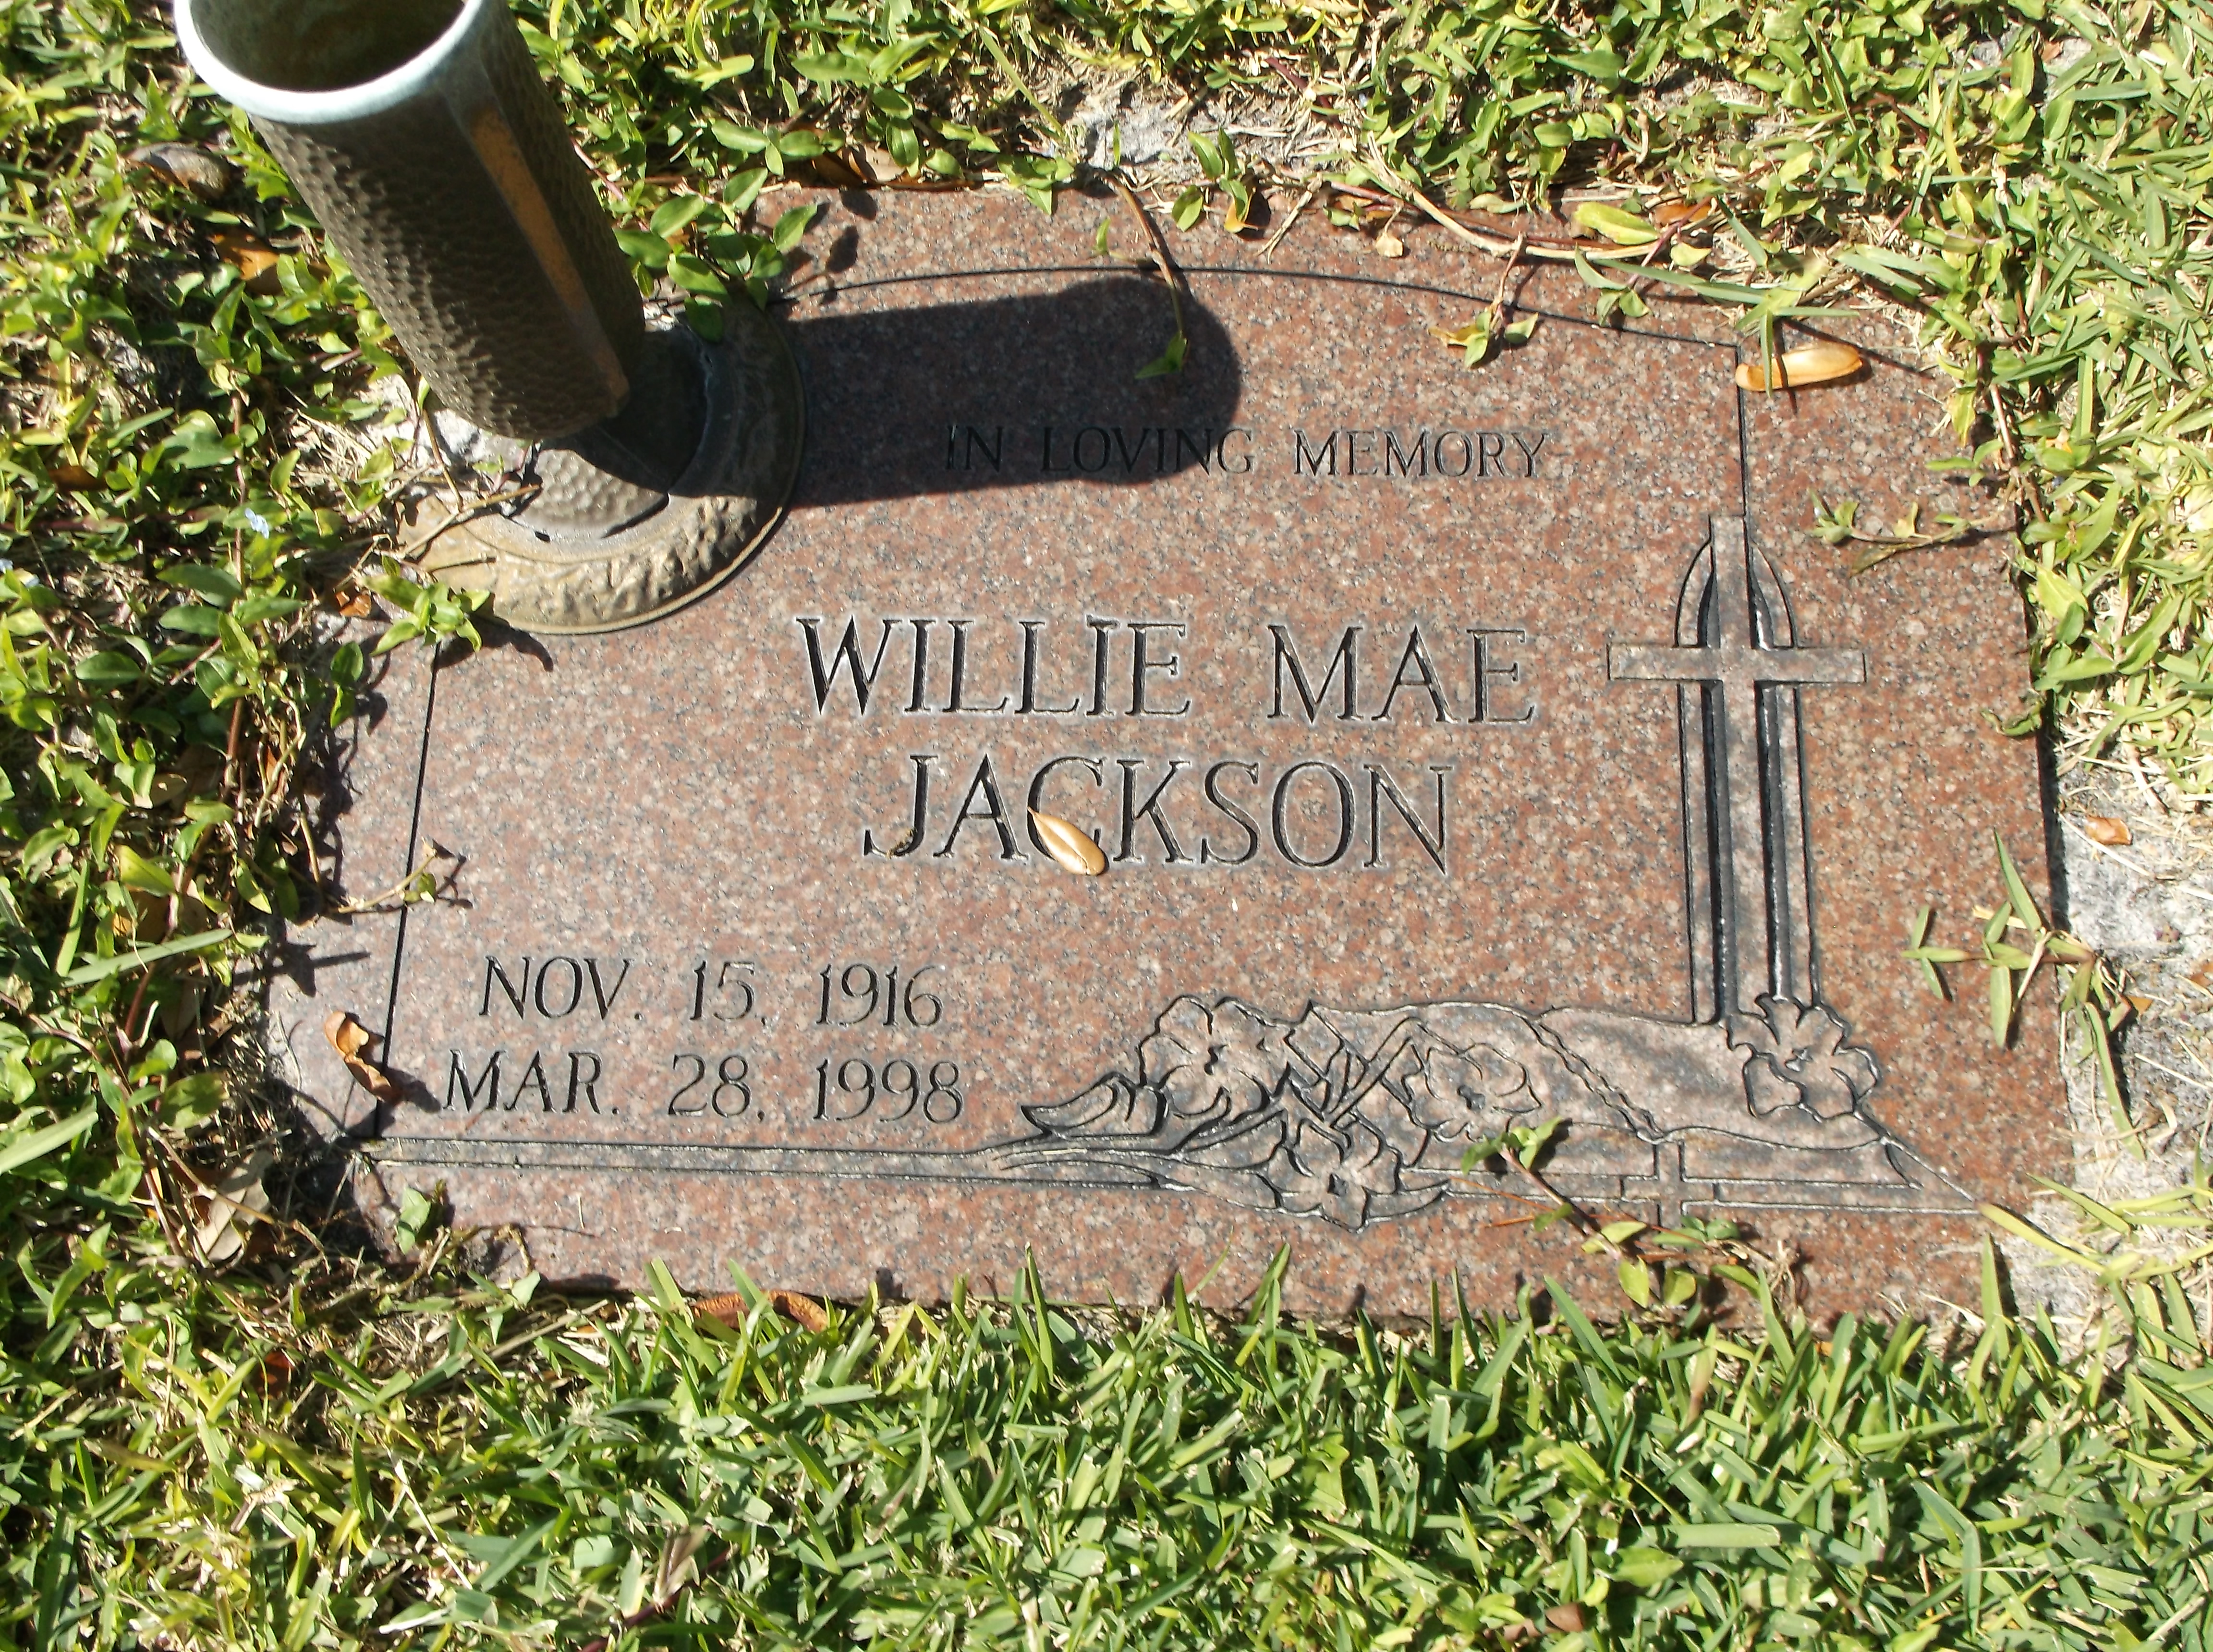 Willie Mae Jackson